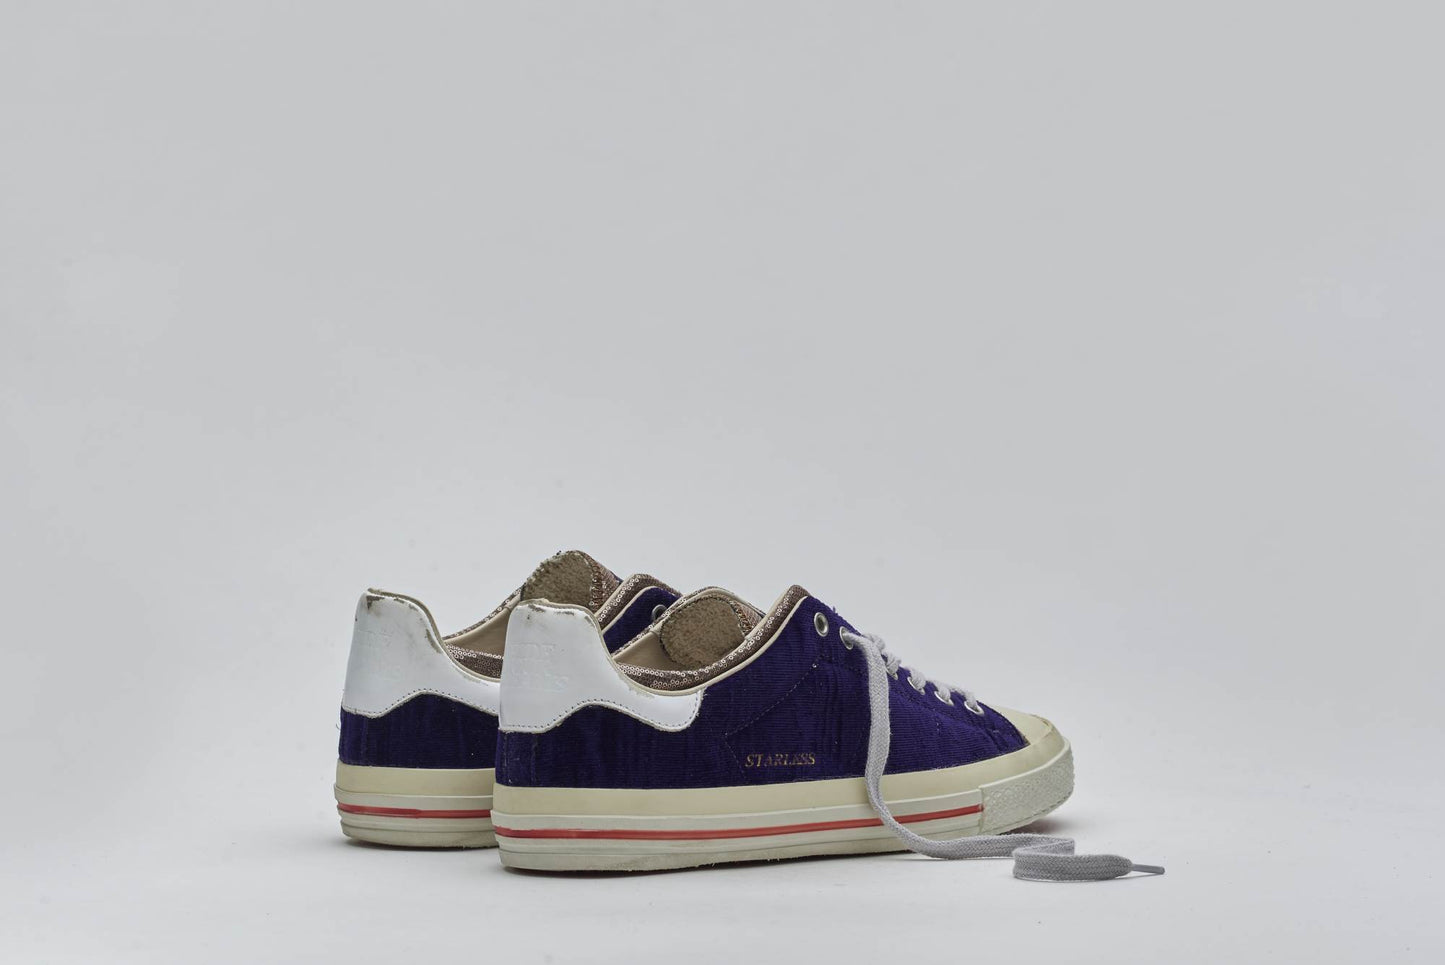 Starless Low, Violet/Desert, sneakers 